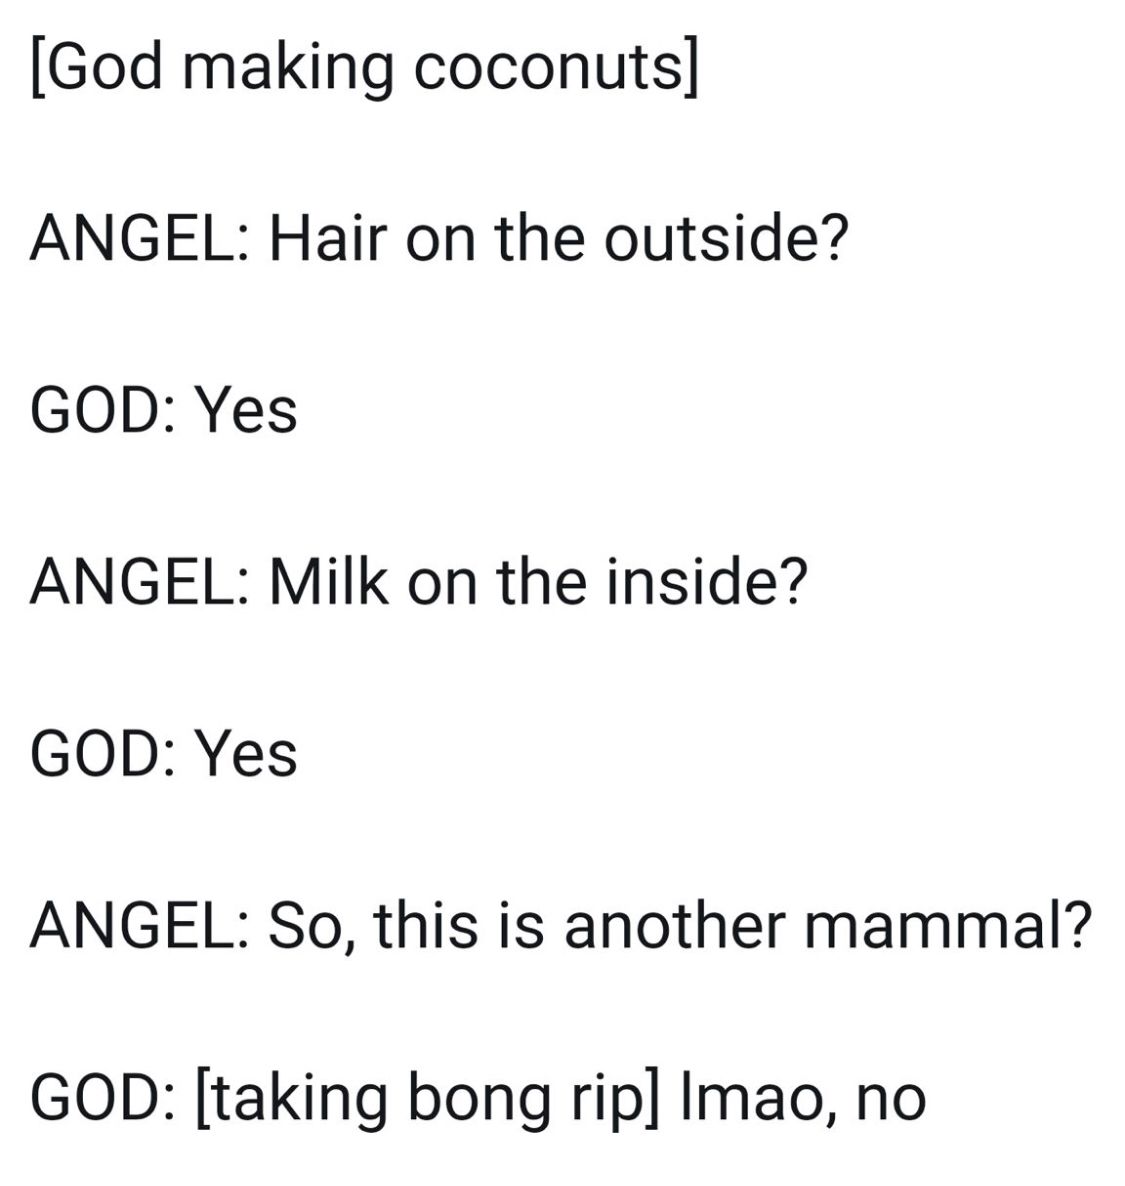 God creates coconuts